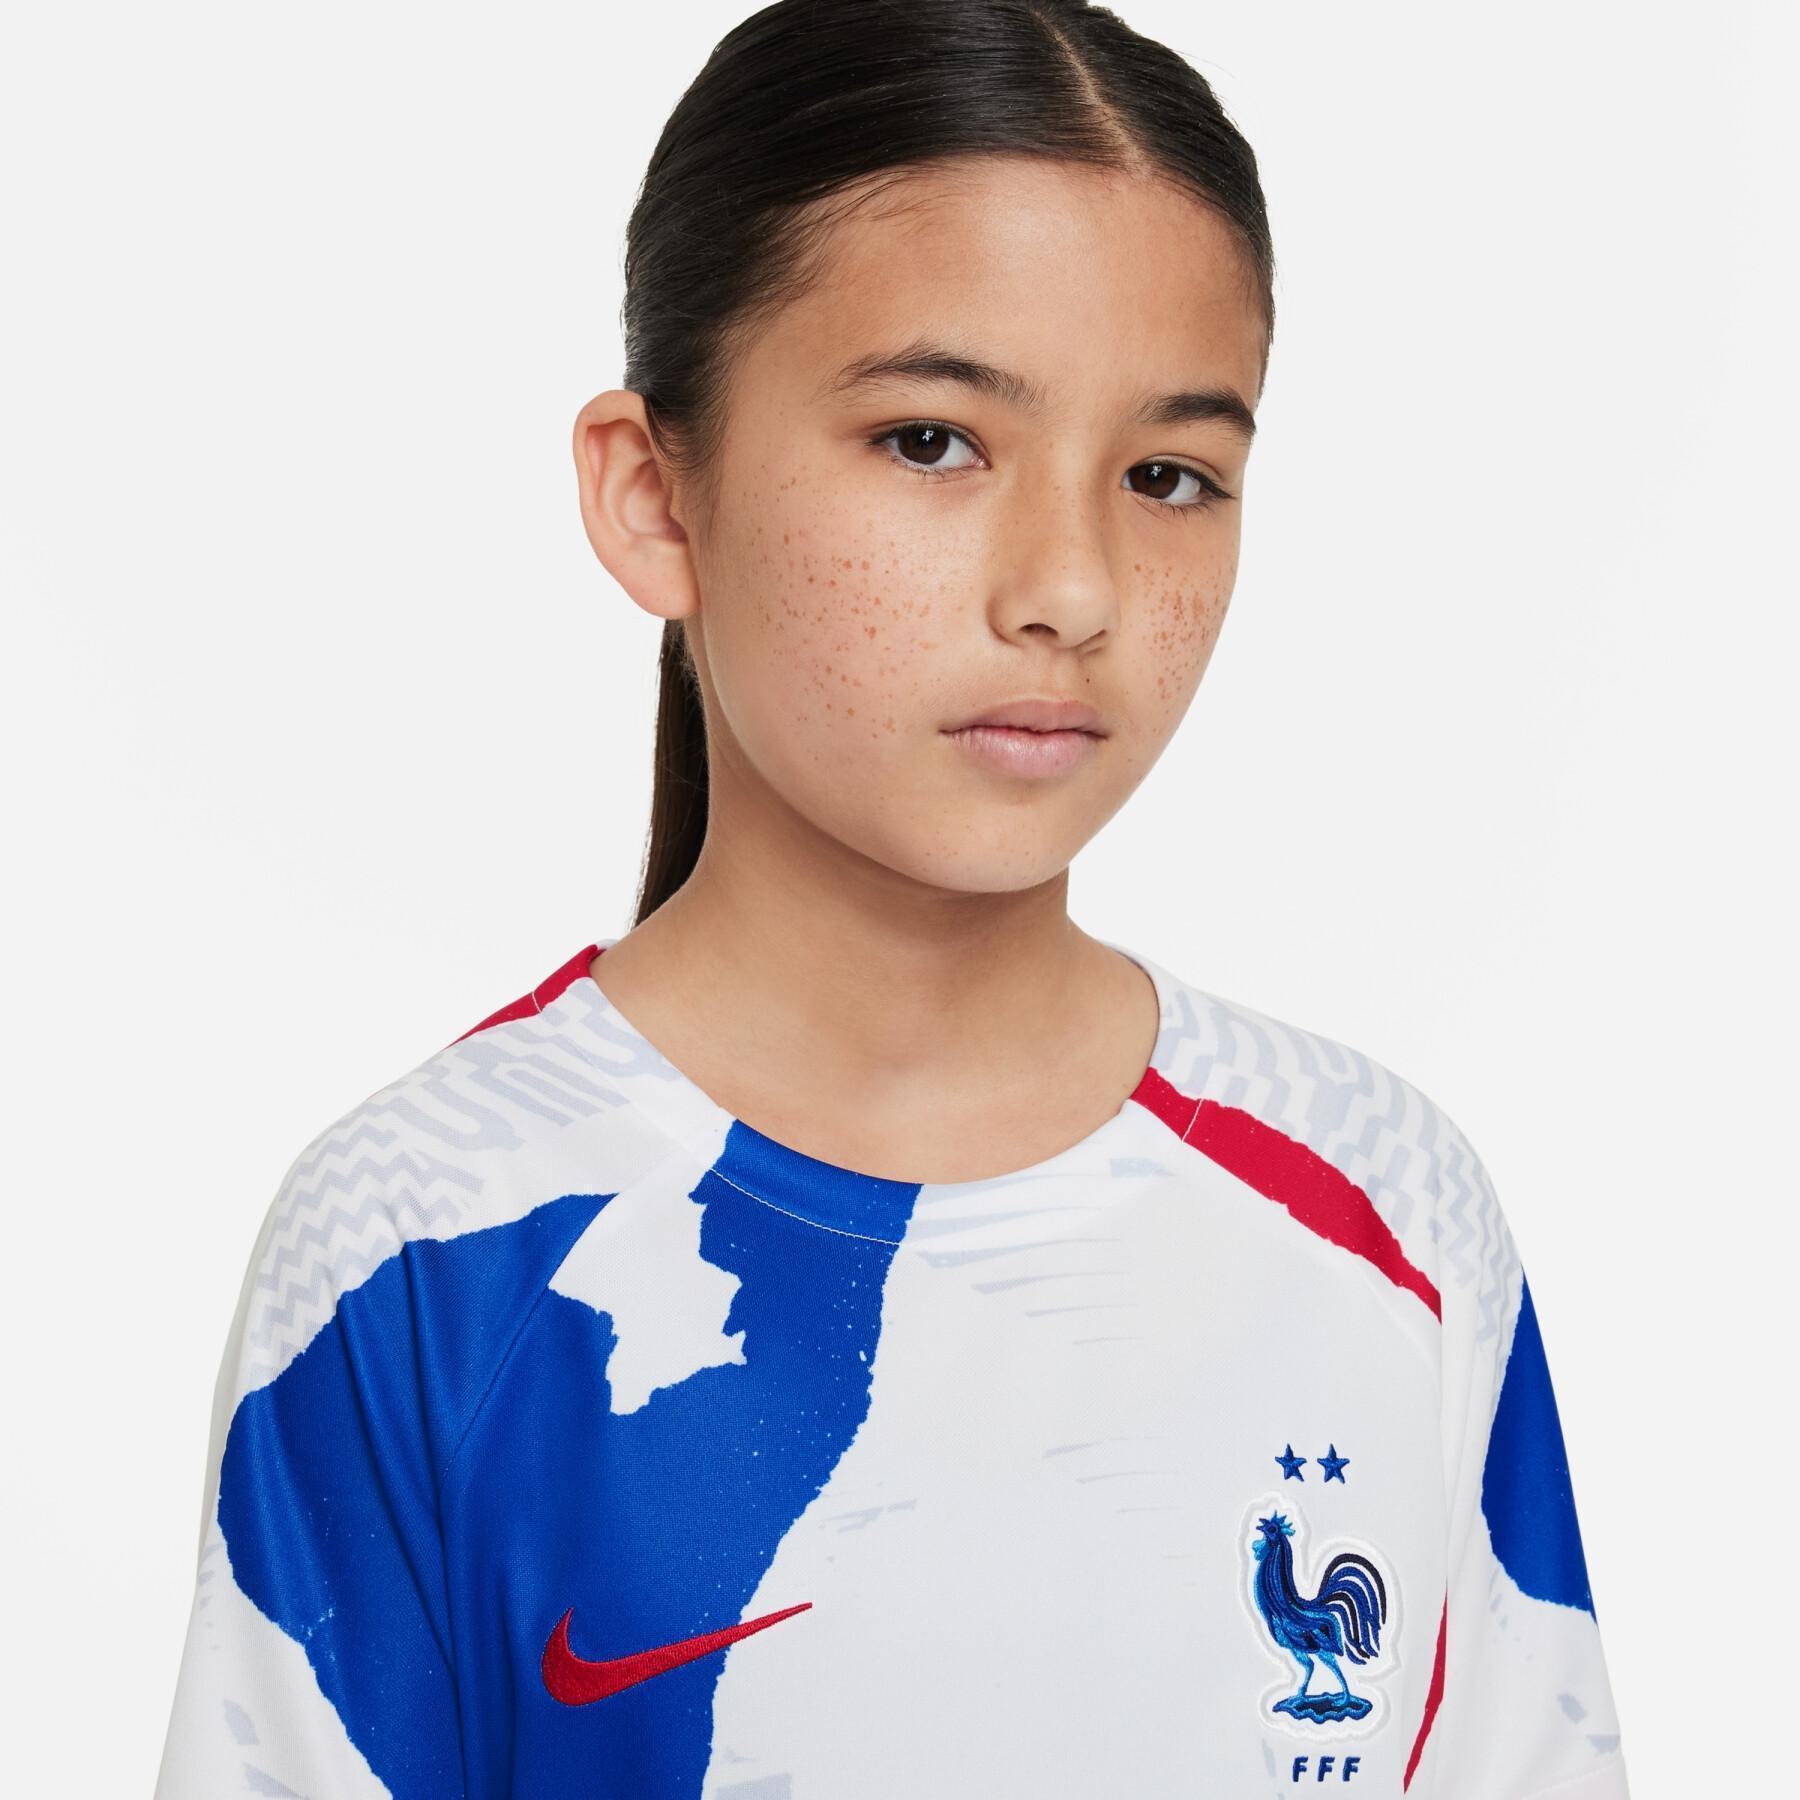 Camiseta premundial 2022 para niños France